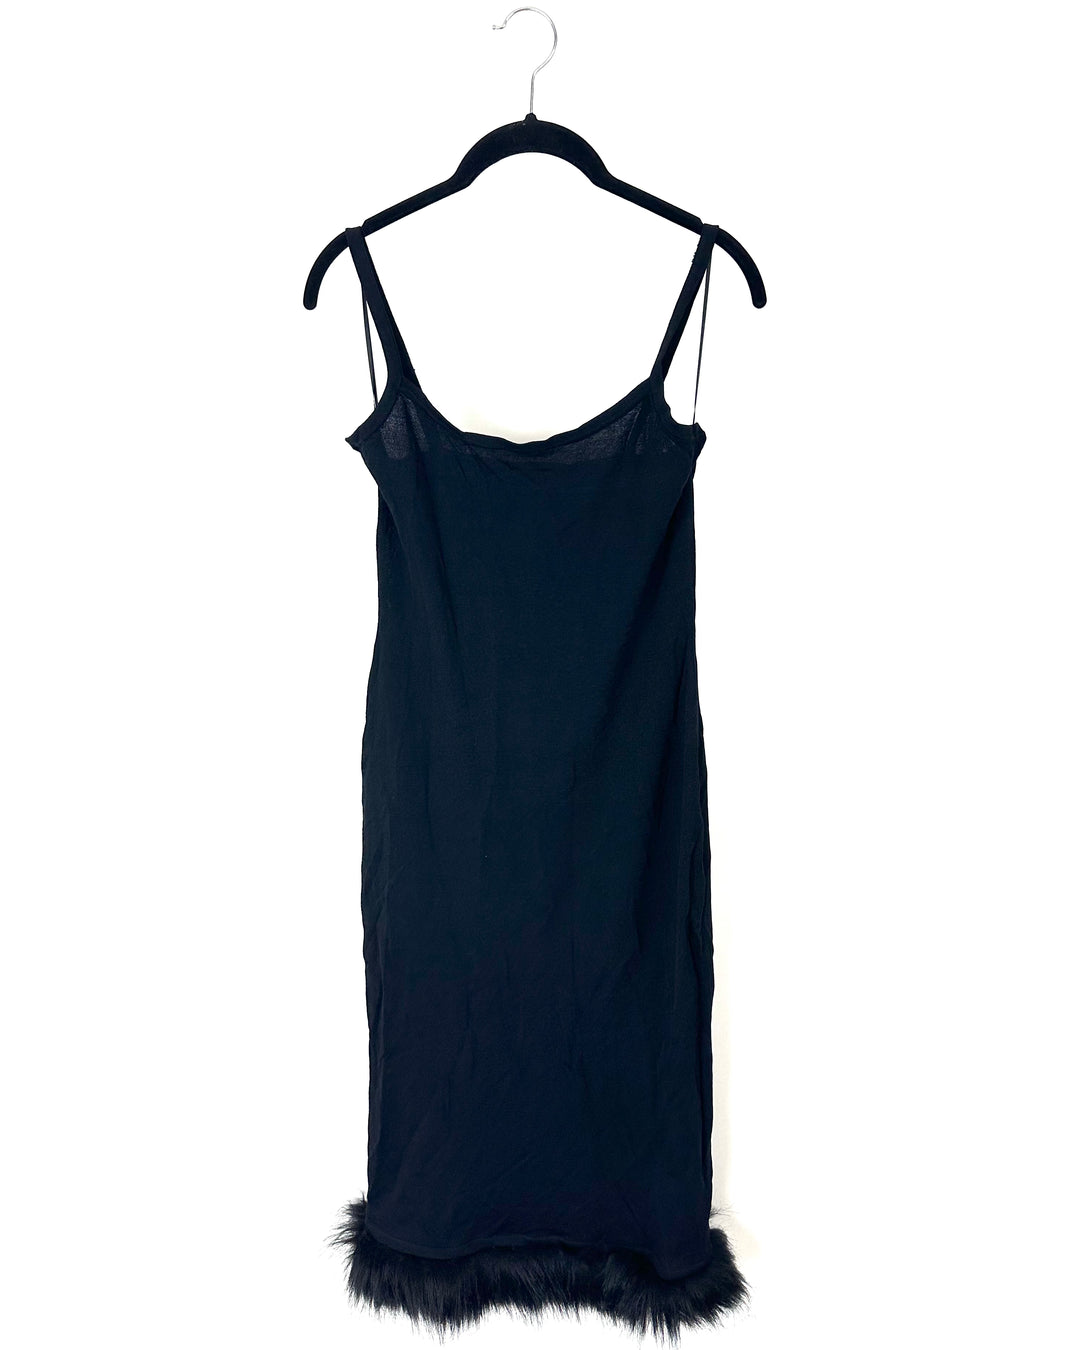 Black Sleeveless Dress - Small, Medium